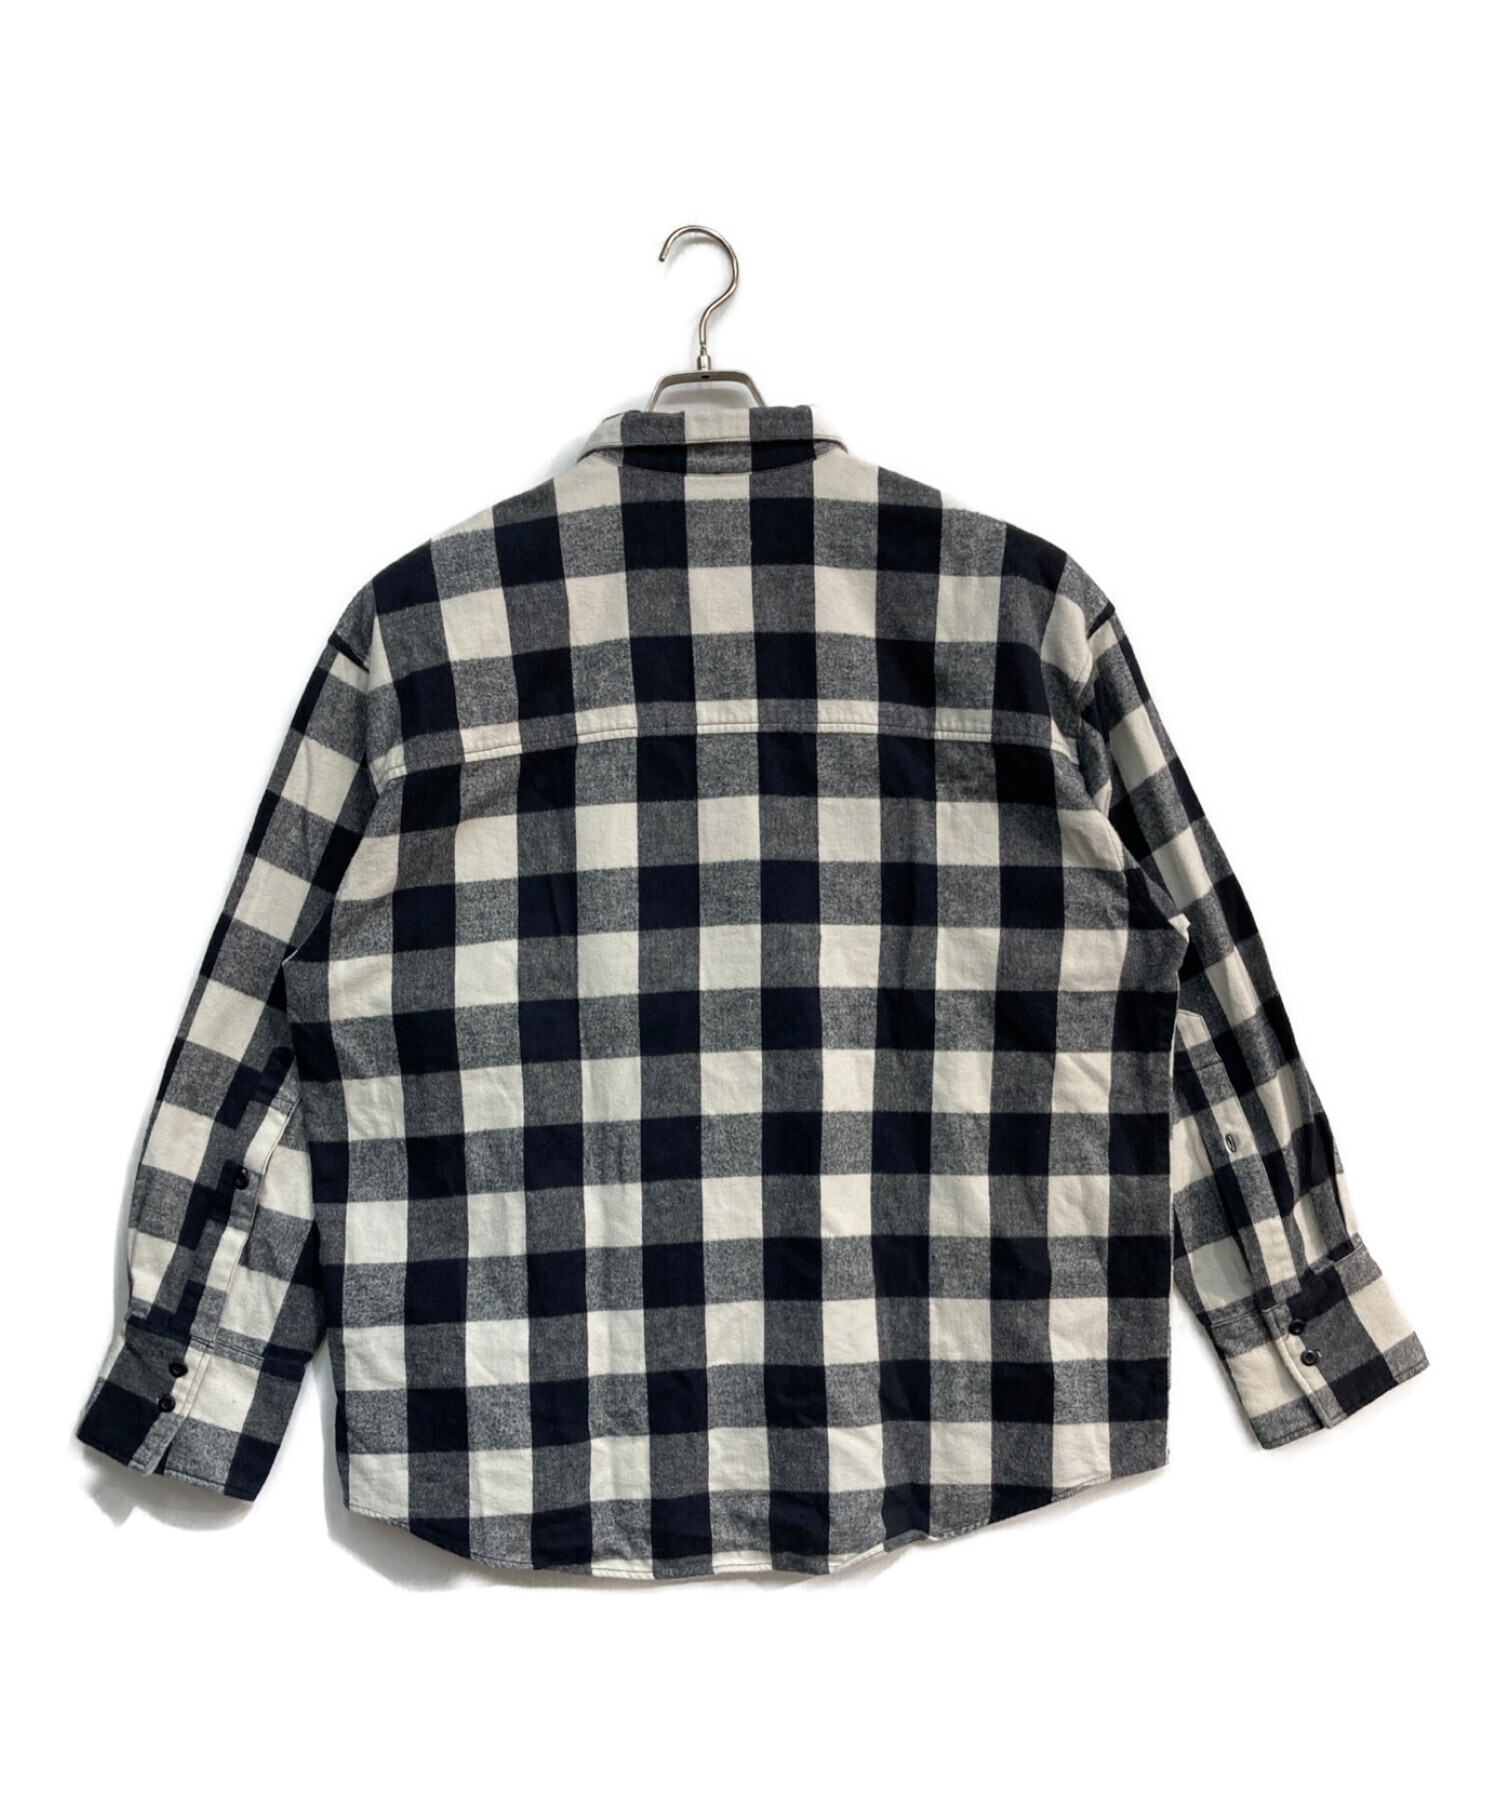 MIYAGIHIDETAKA Flannel Shirt チェック シャツ - シャツ